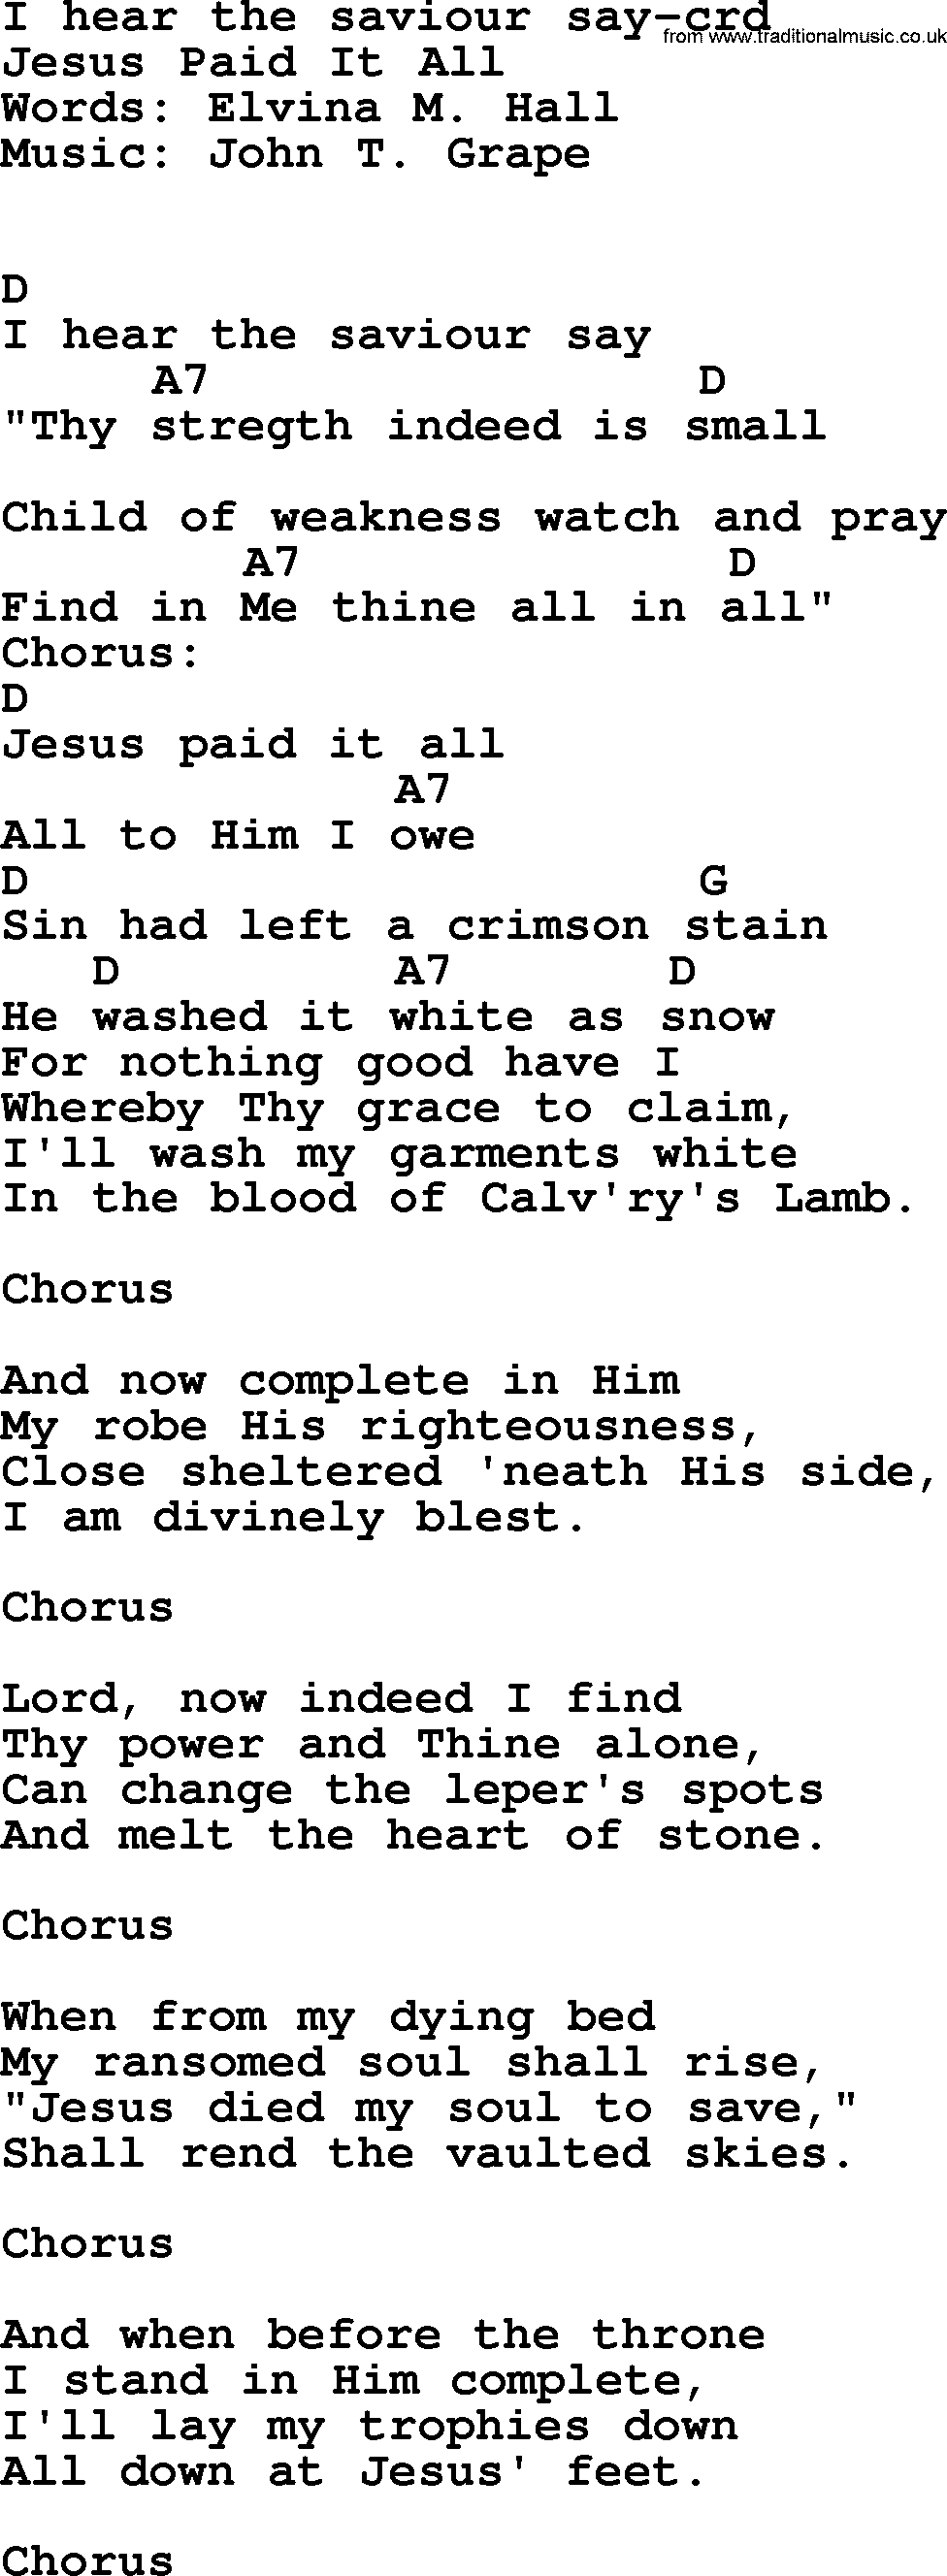 Top 500 Hymn: I Hear The Saviour Say, lyrics and chords